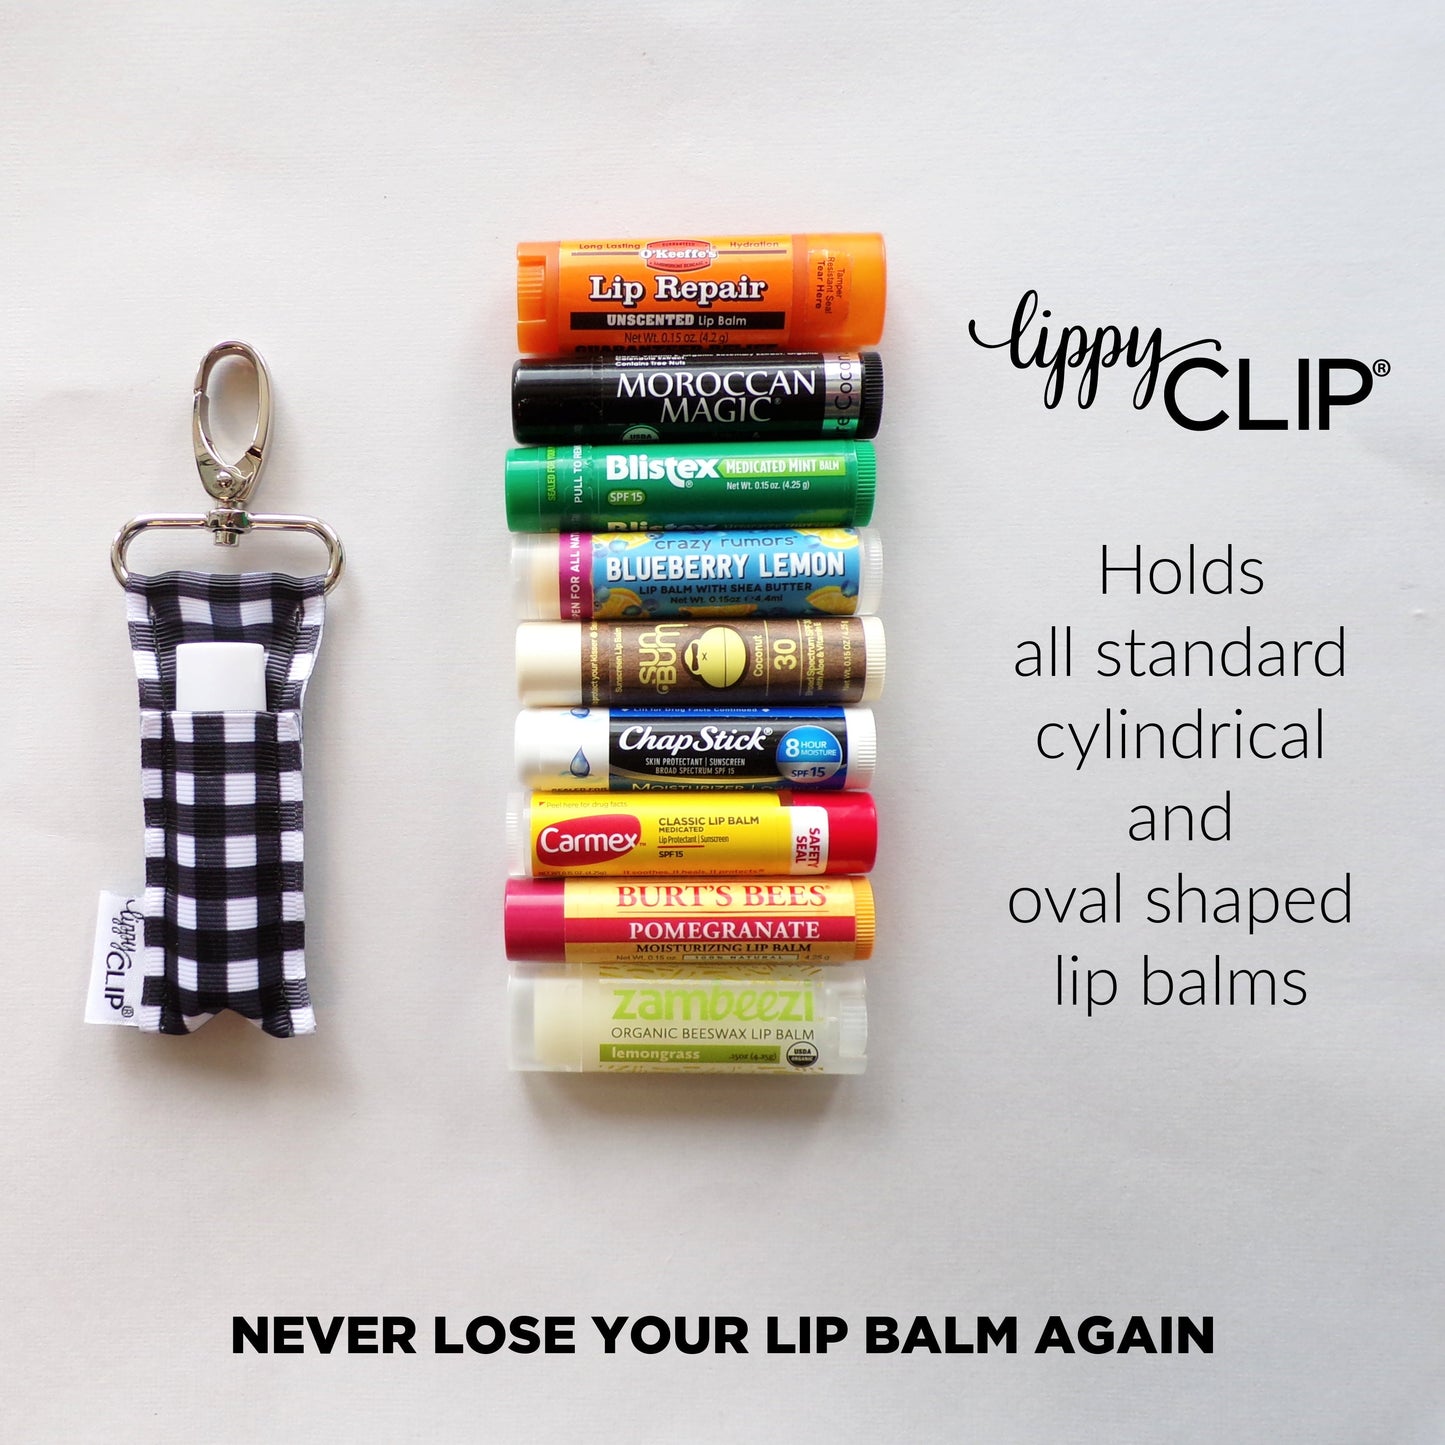 Nurse LippyClip® Lip Balm Holder